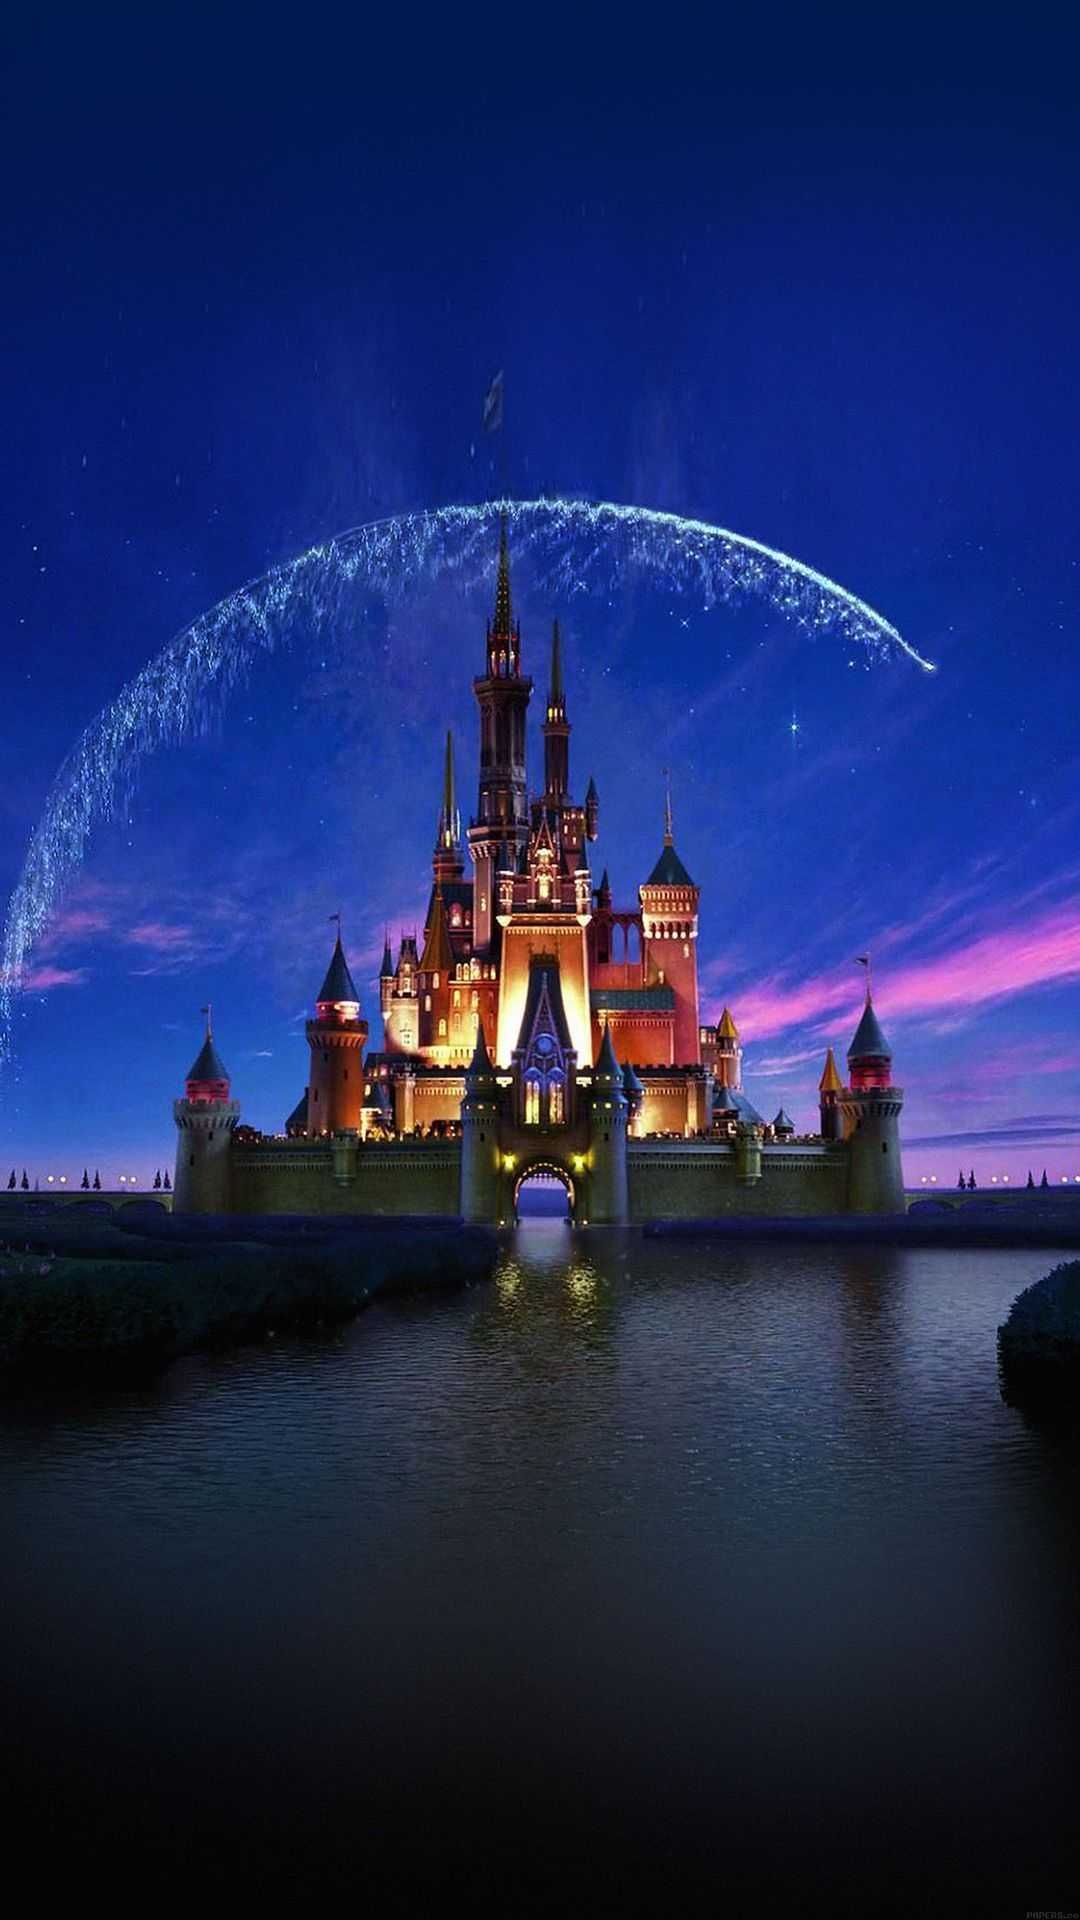 Disney Animation, 4K wallpaper, High-resolution imagery, Disney theme, 1080x1920 Full HD Handy